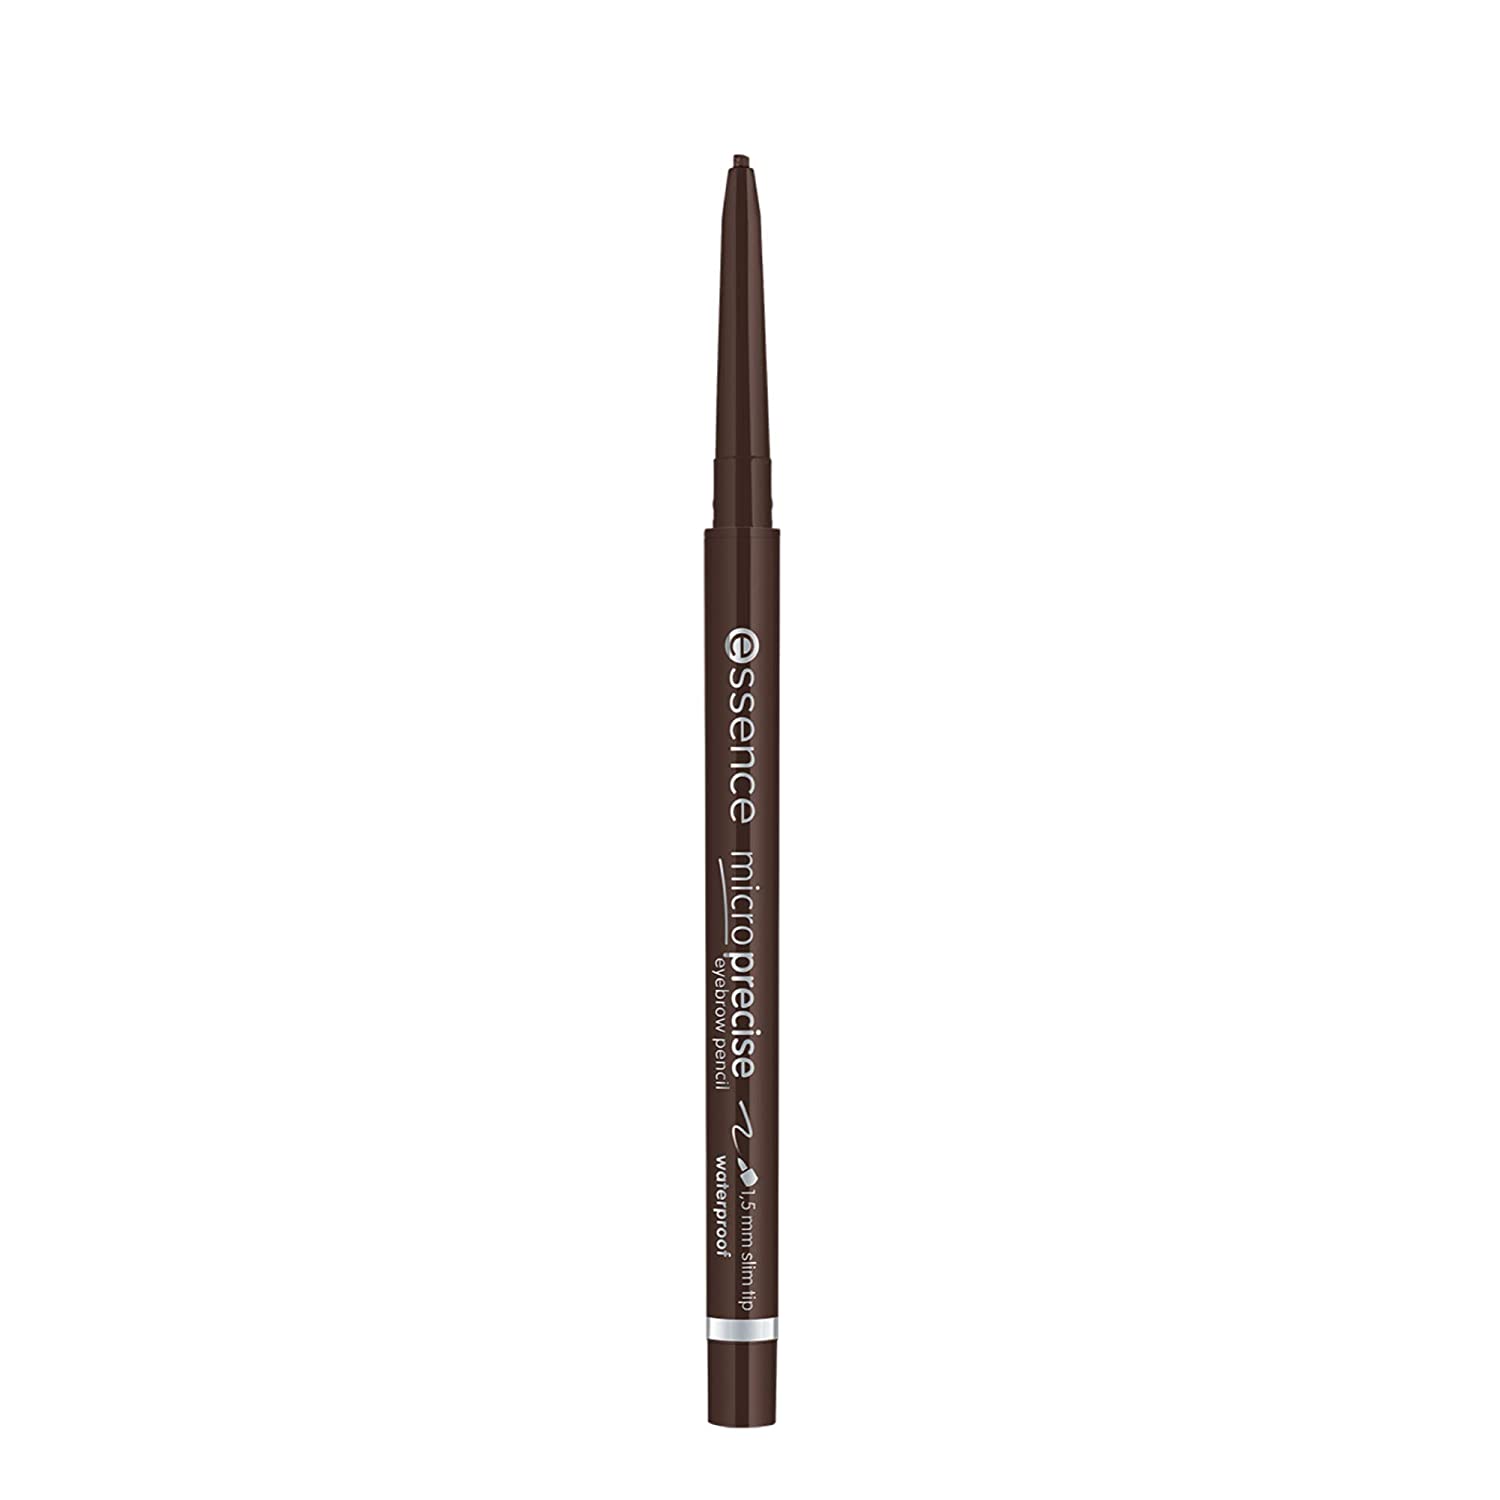 essence cosmetics essence Micro precise eyebrow pencil, Kajal, 1.5 mm thin tip, waterproof, no. 03 dark brown, brown, defining, natural, vegan, waterproof, microplastic particles free (0.05 g)